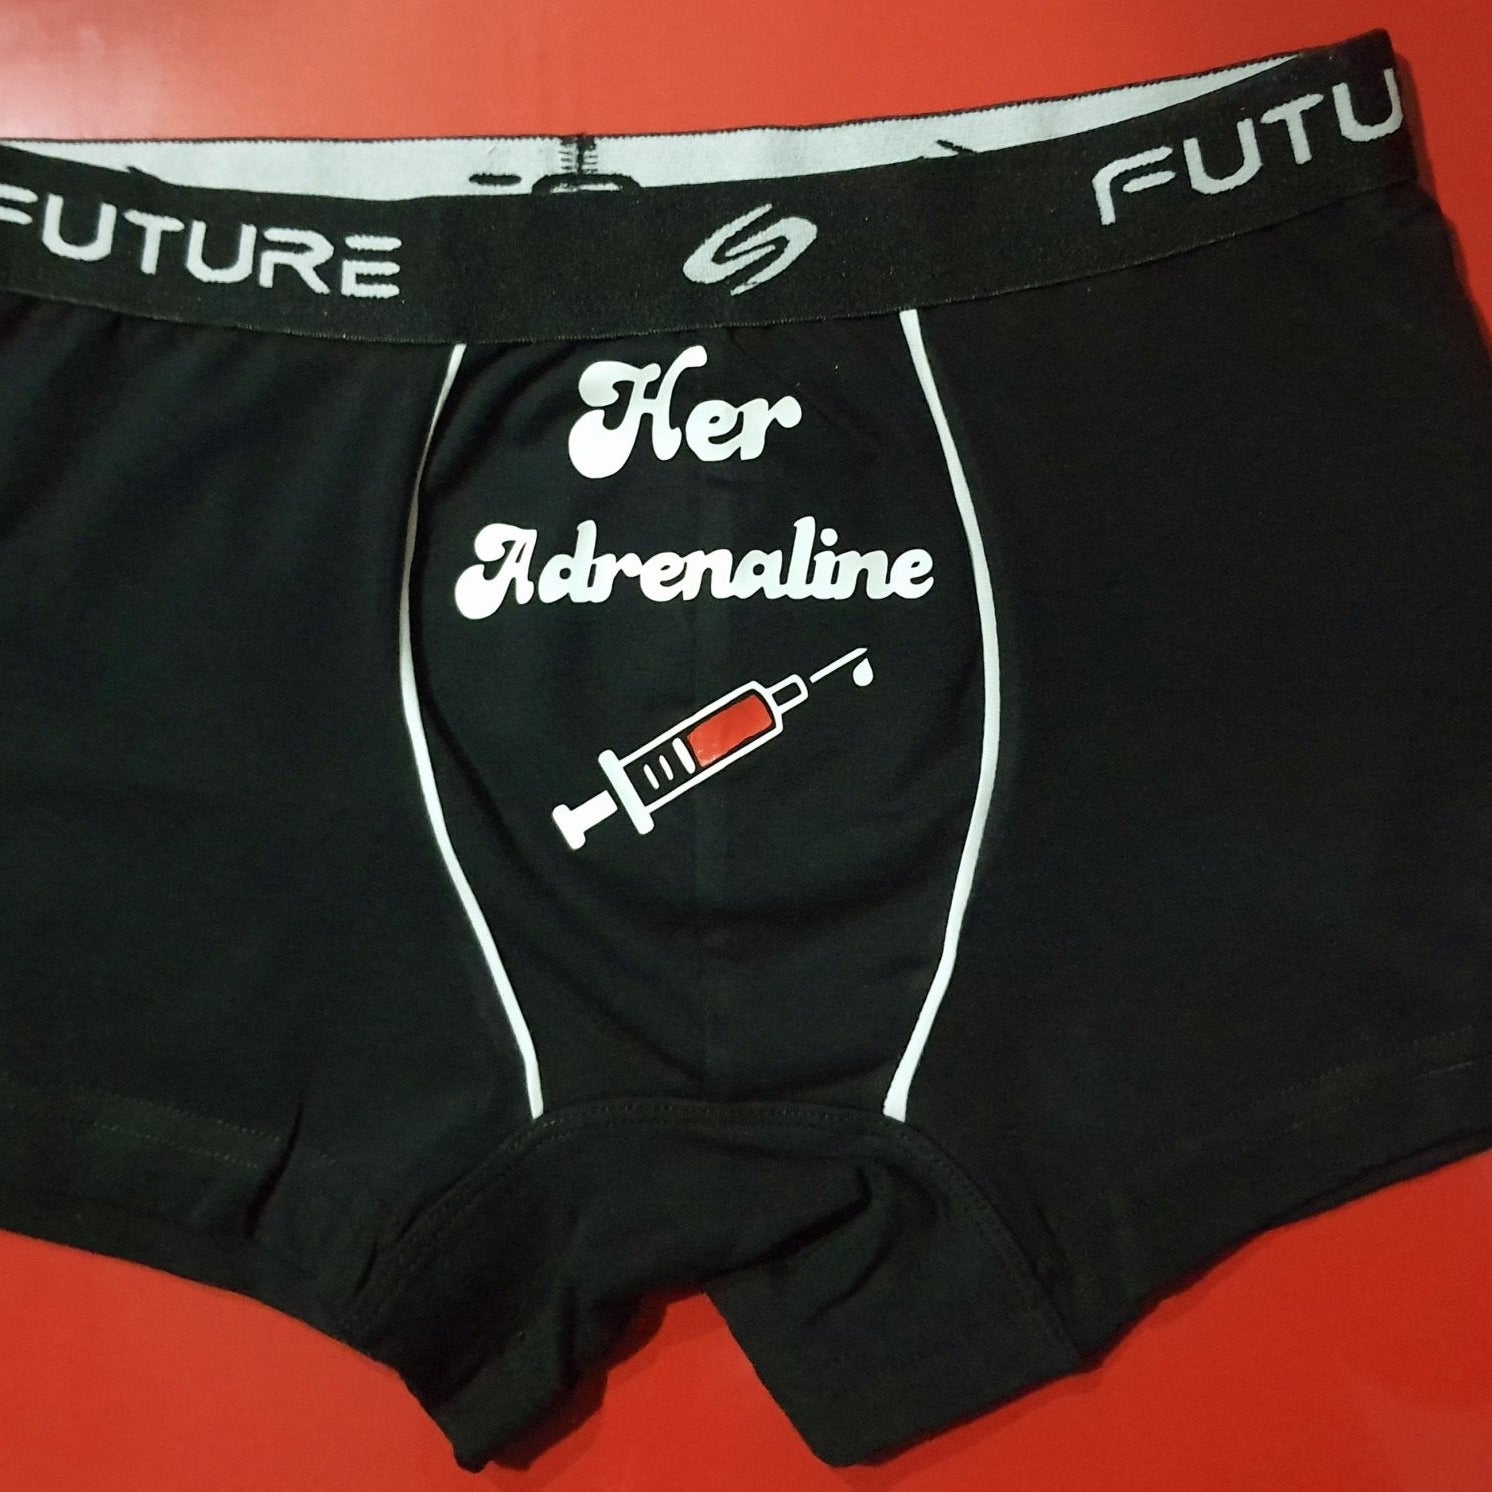 Men underwear - Adrenaline - Etba3lly